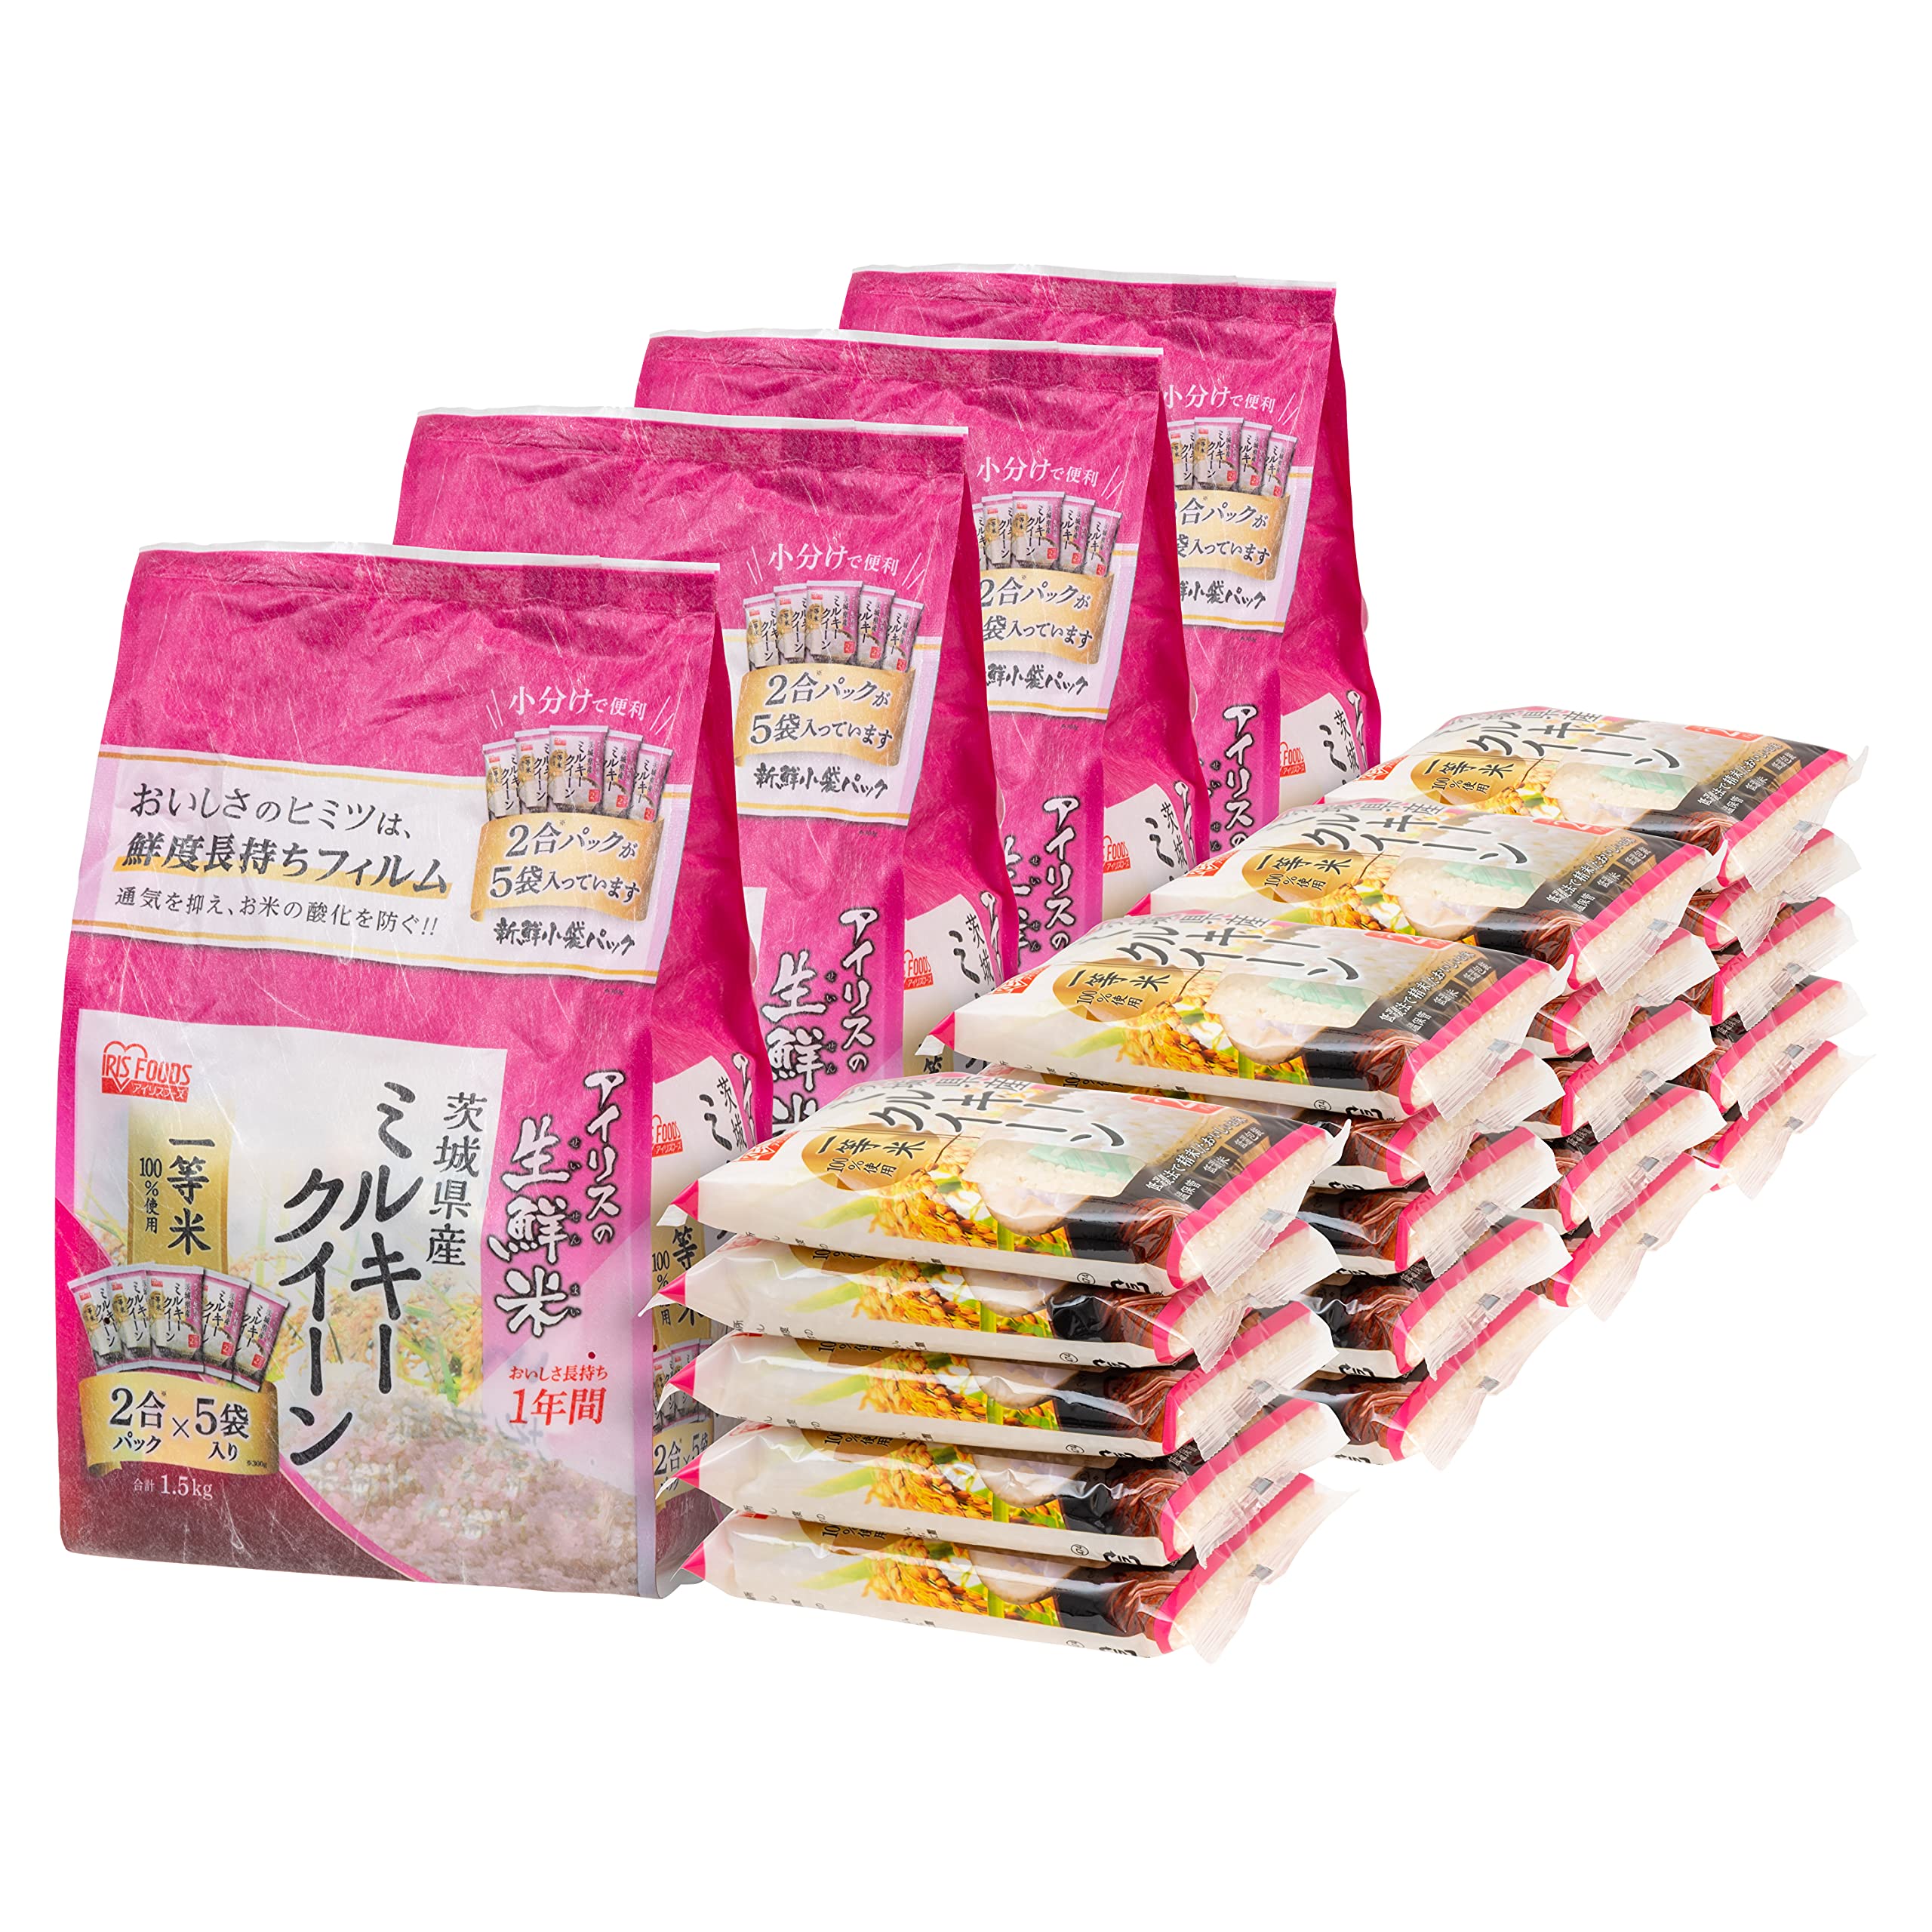 IRIS USA, Inc. Milky Queen From Ibaraki, Japanese Premium Short Grain White Rice, Product Of Japan, 3 Lbs., 4 Pack, 13.2 Lb